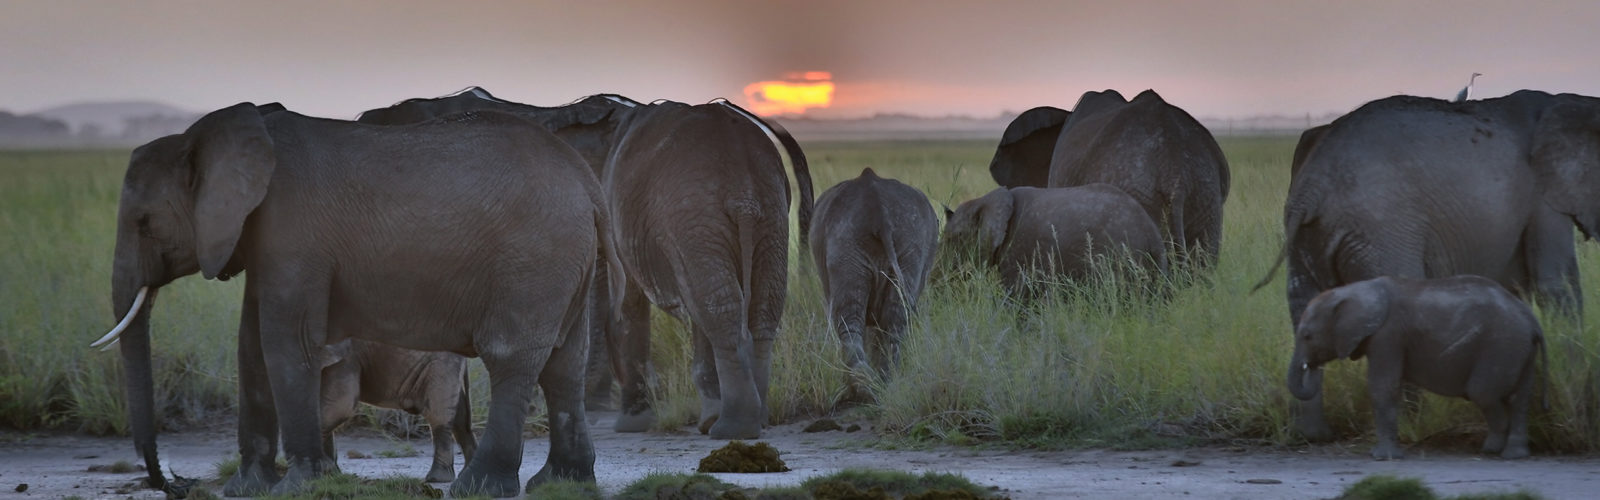 amboseli-elephants-sunset